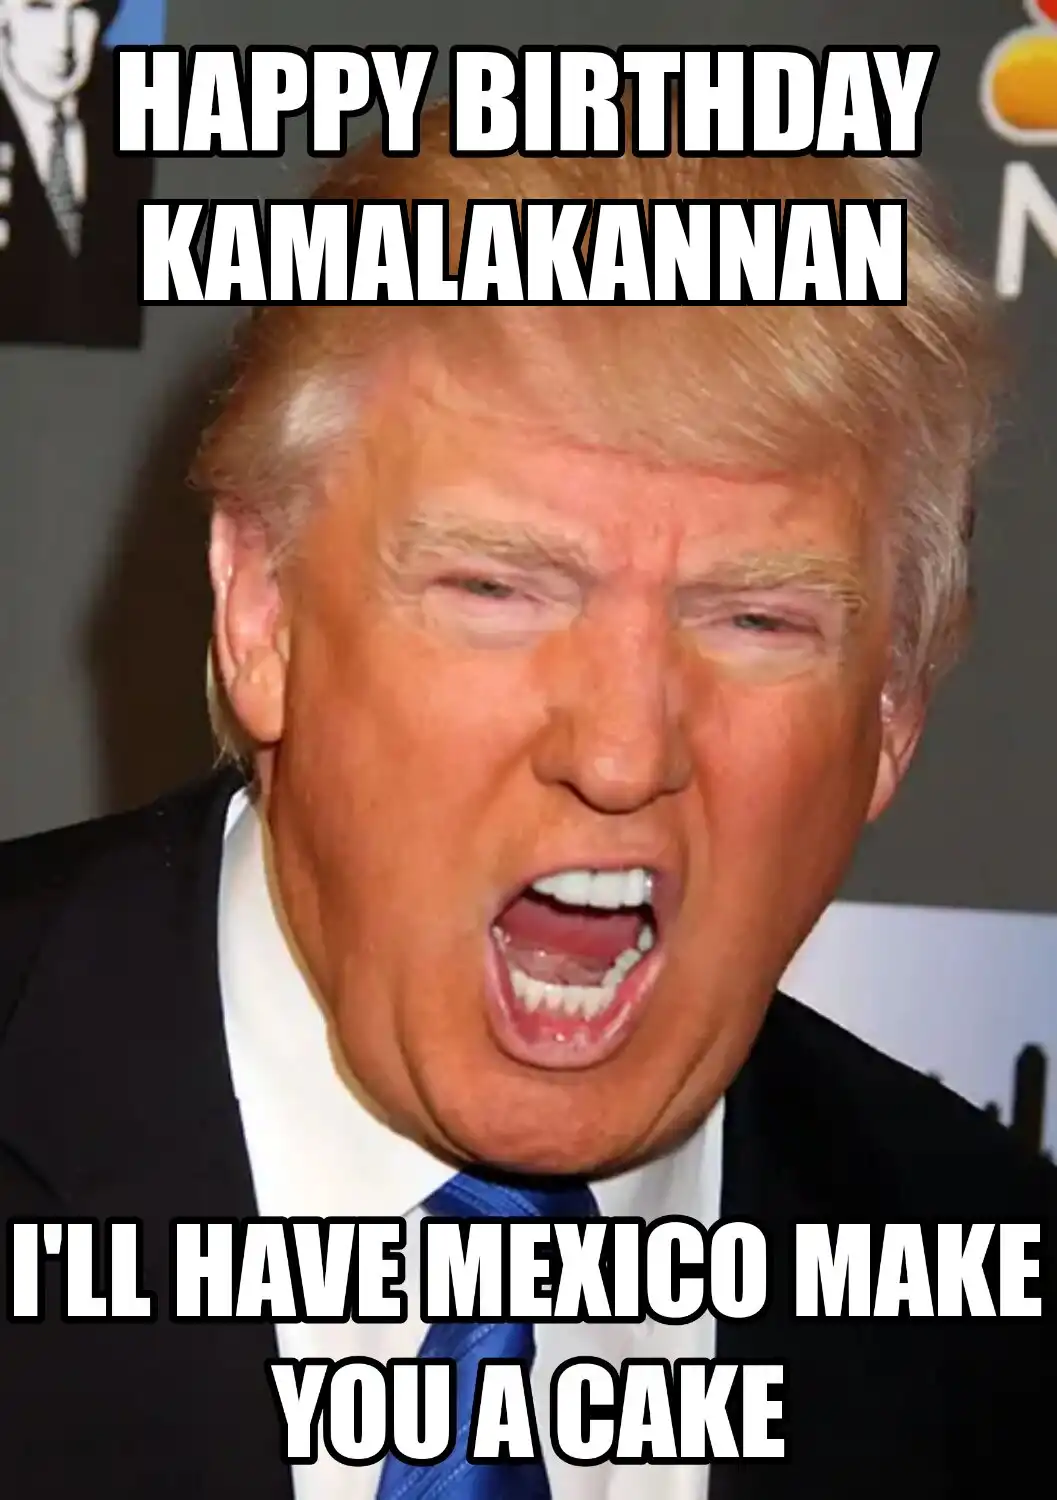 Happy Birthday Kamalakannan Mexico Make You A Cake Meme